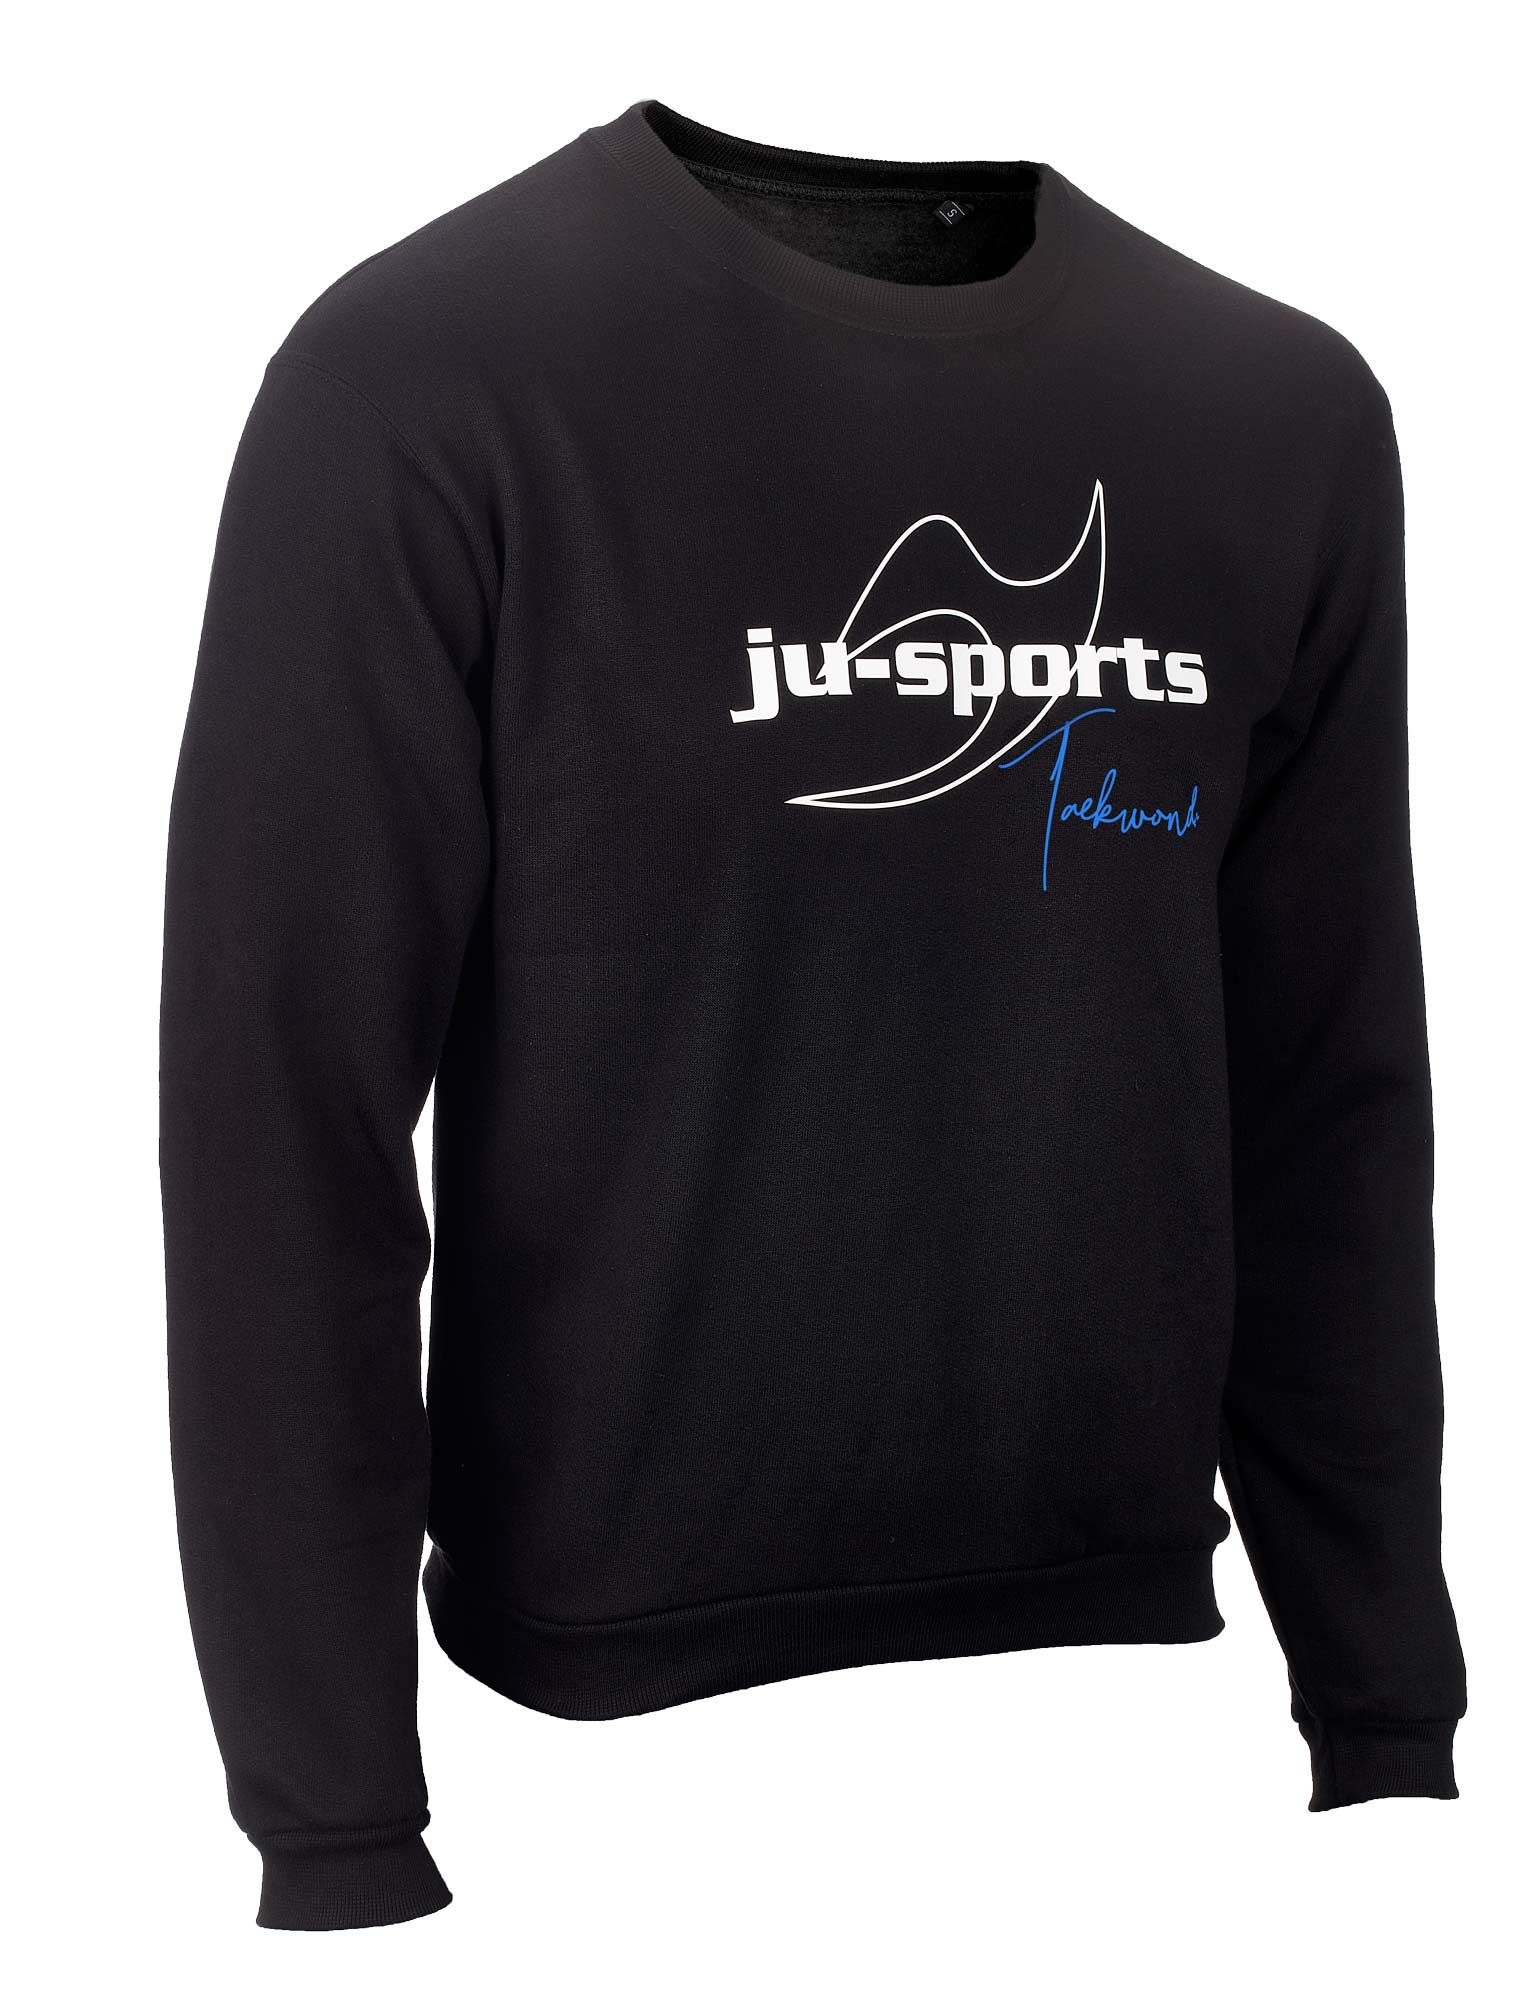 Ju-Sports Signature Line "Taekwondo" Sweater